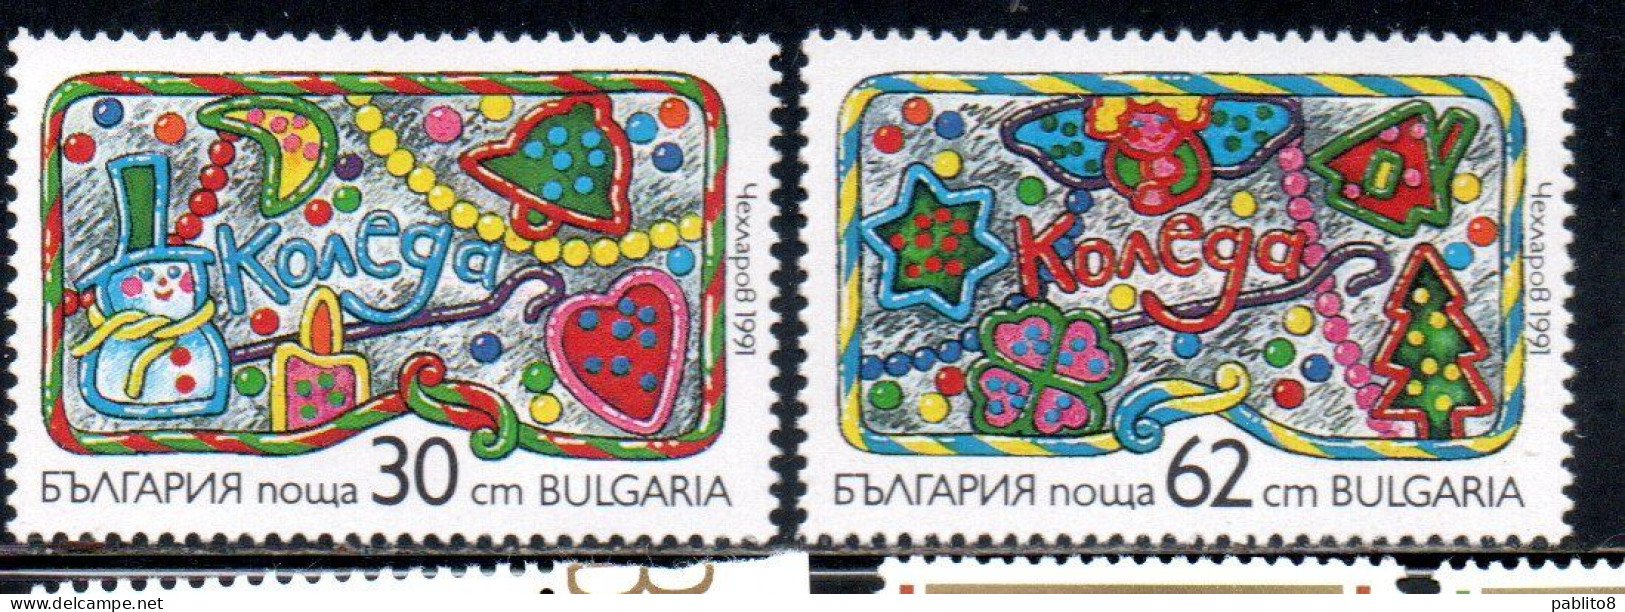 BULGARIA BULGARIE BULGARIEN 1991 CHRISTMAS NATALE NOEL WEIHNACHTEN NAVIDAD COMPLETE SET SERIE COMPLETA MNH - Nuevos